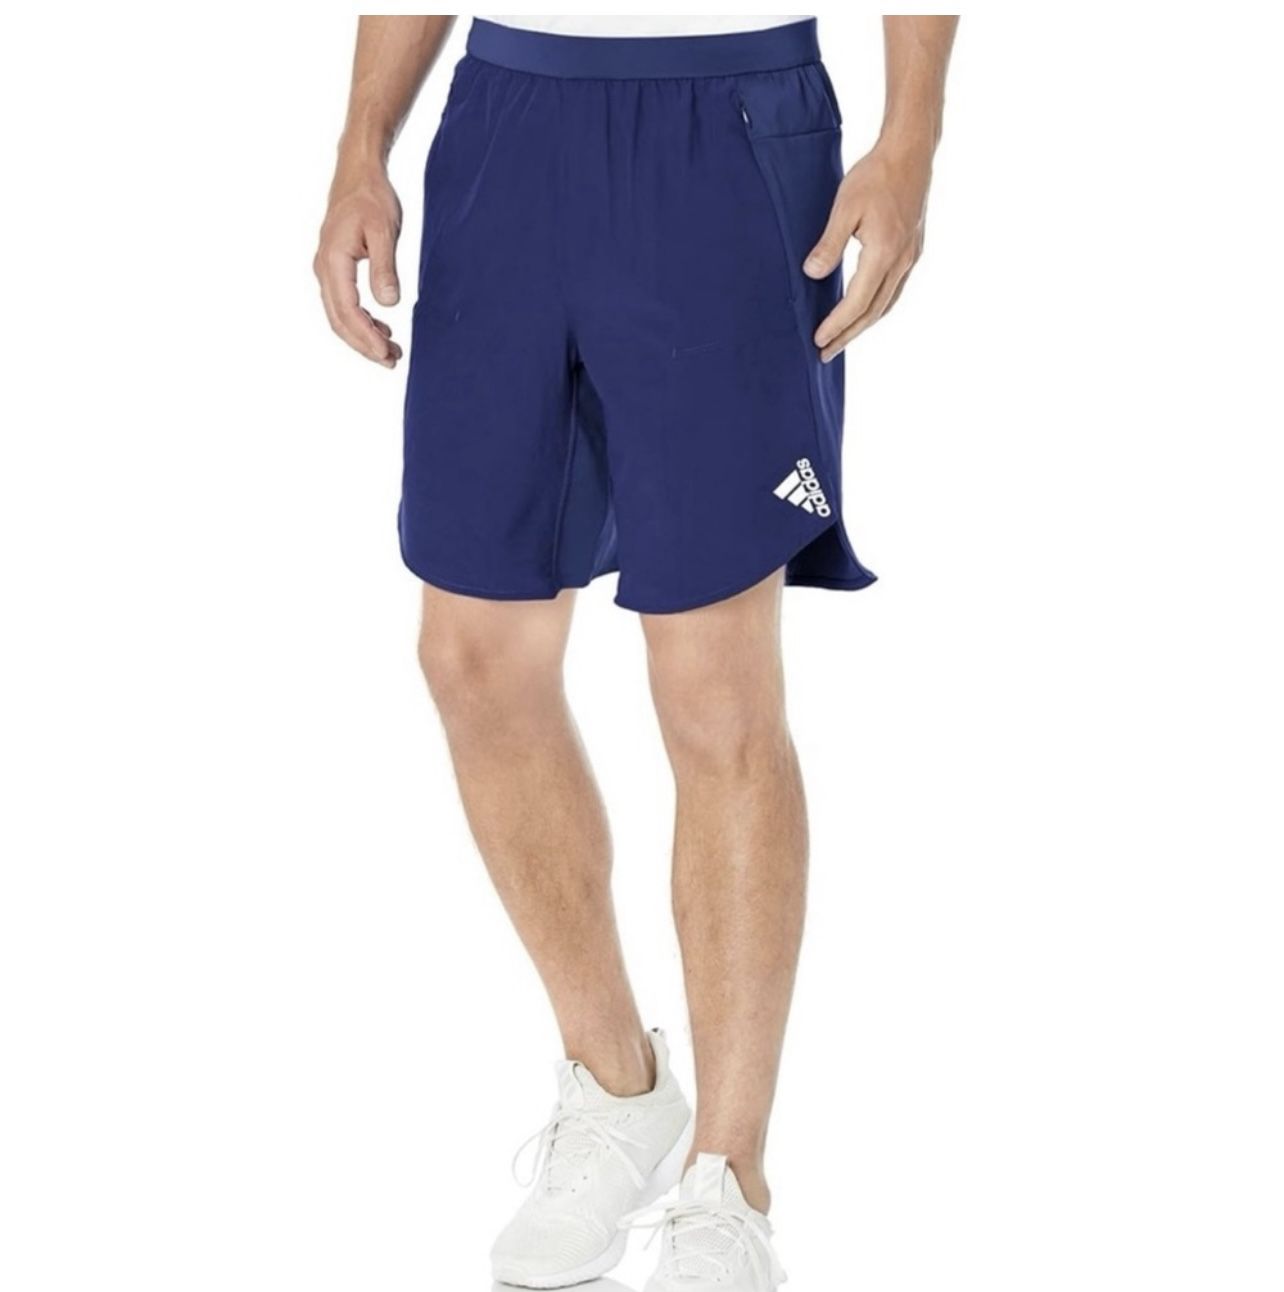 Adidas Men's Designed 4 Sport Training Shorts 2XL